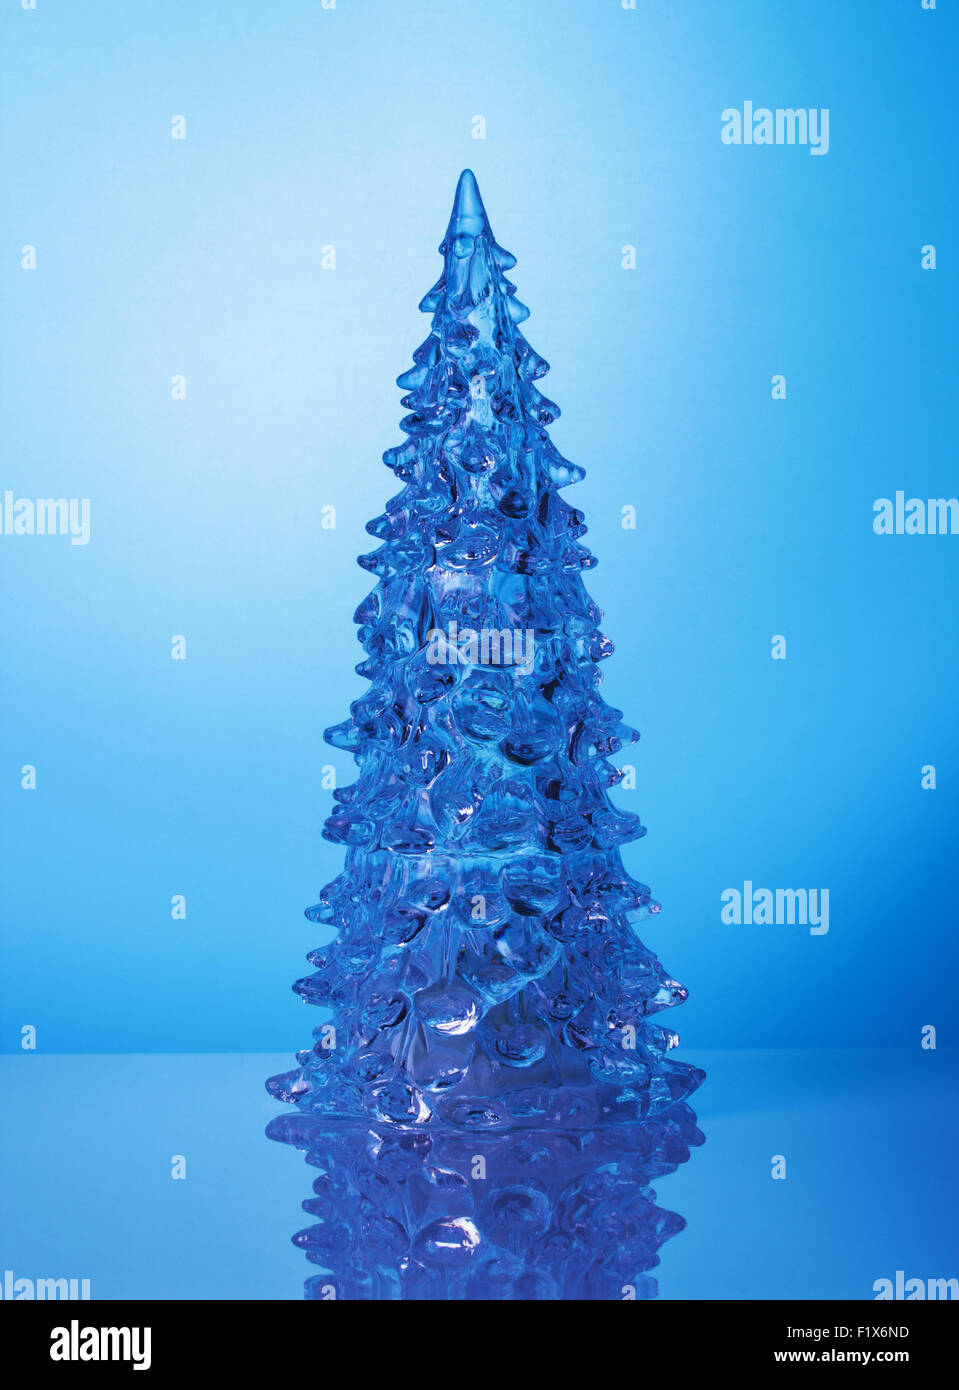 Arbre de Noël de cristal sur fond bleu. Banque D'Images